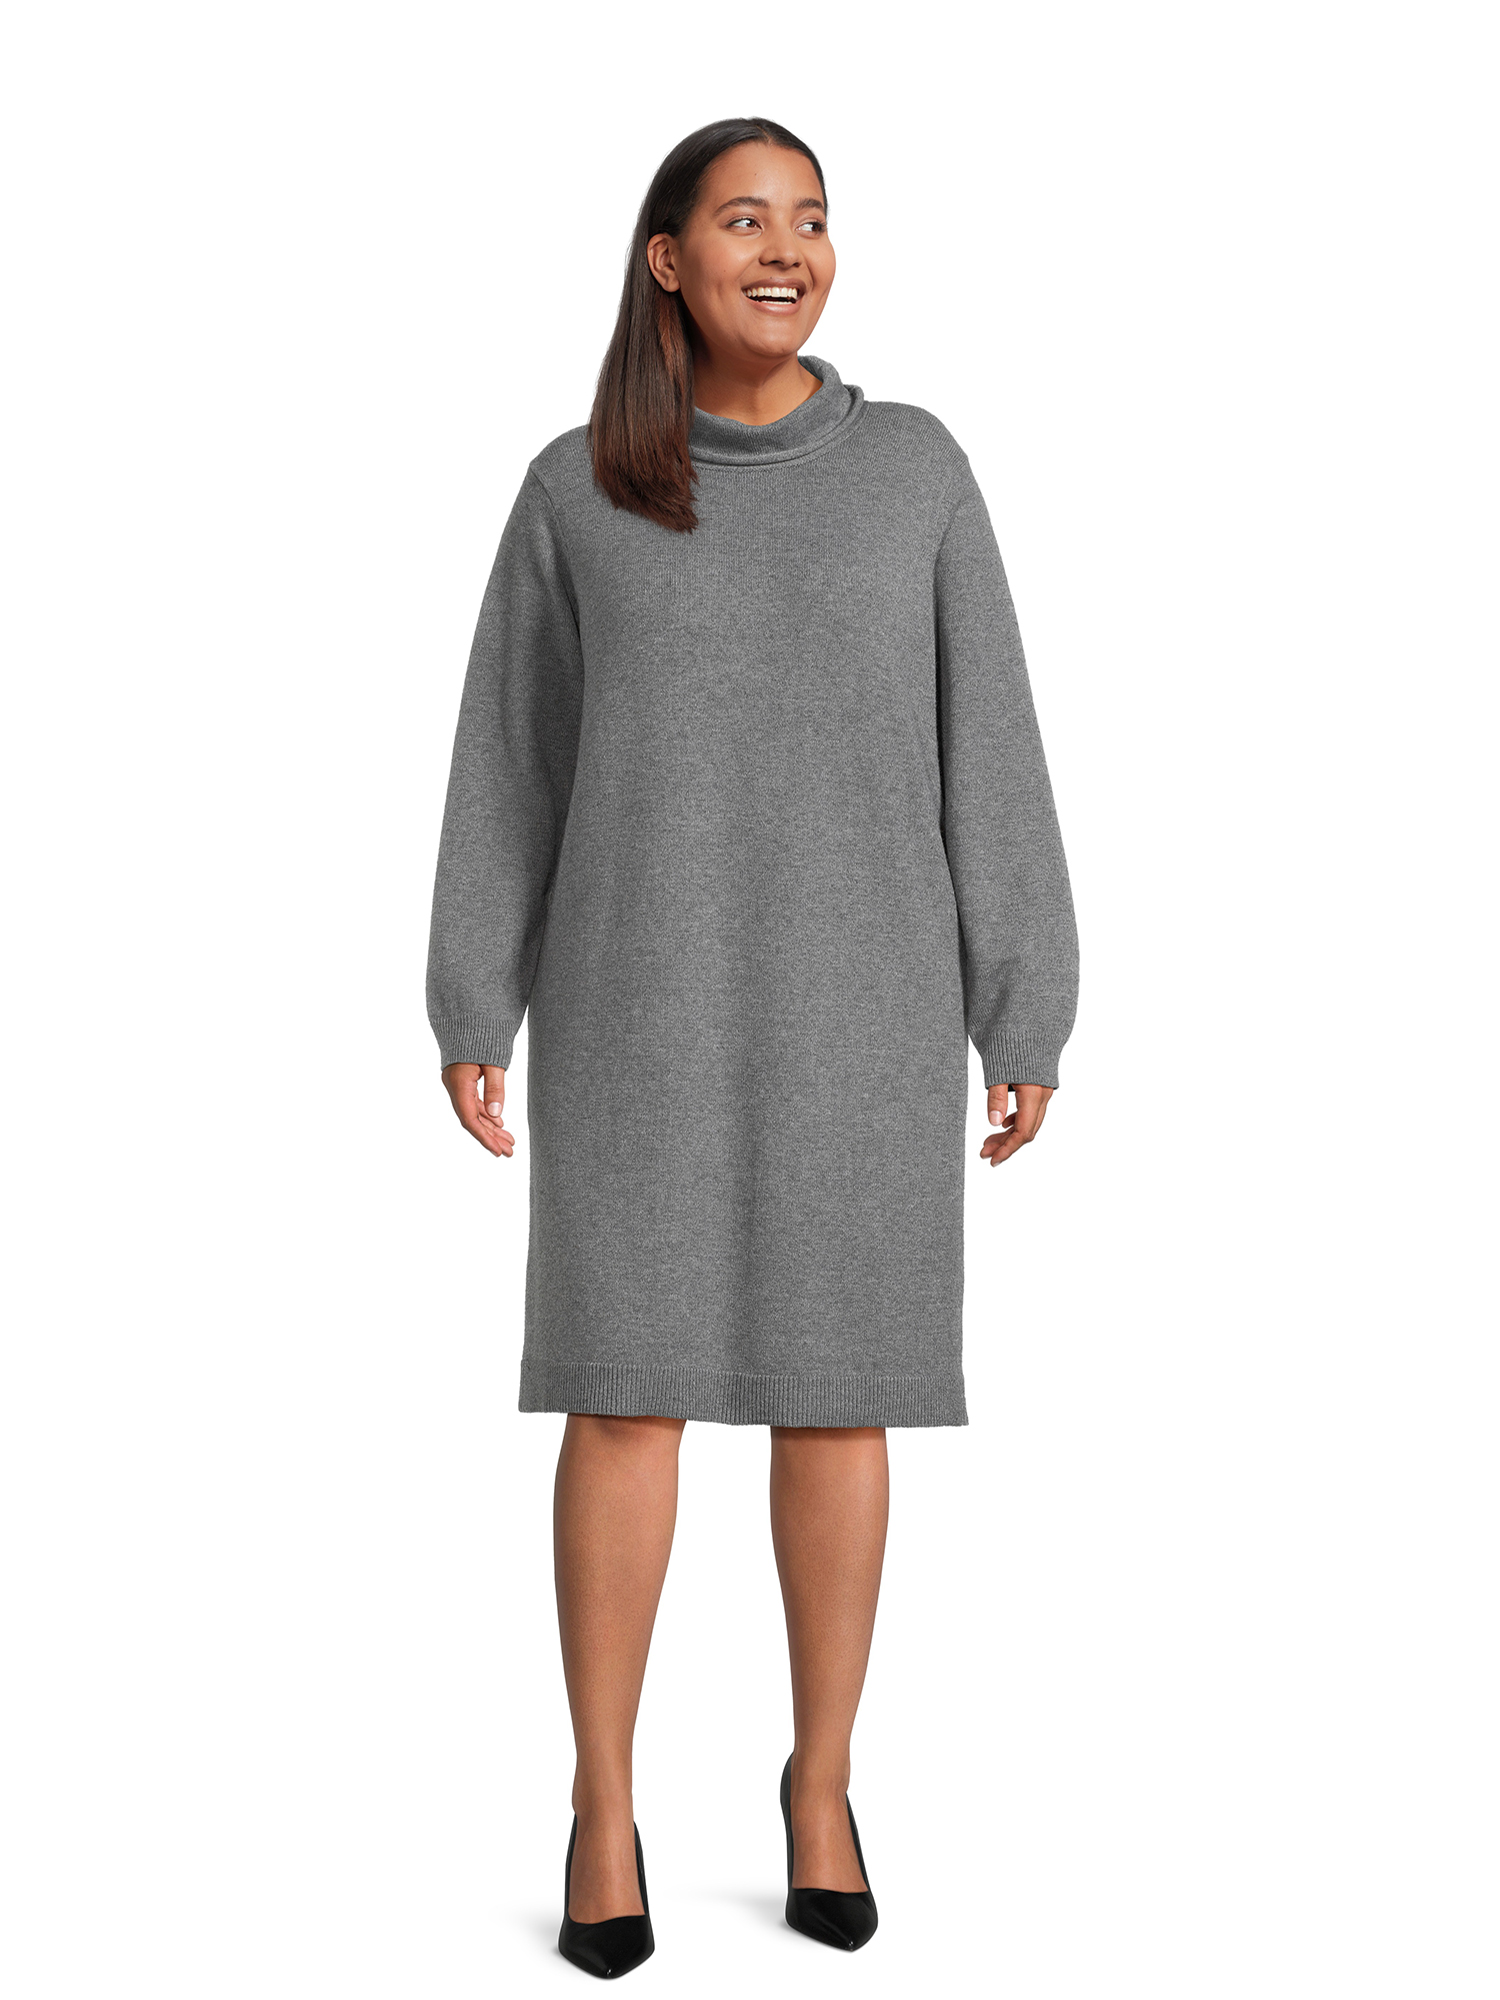 Terra & Sky Women's Plus Size Turtleneck Tunic Length Sweater Dress - image 2 of 5